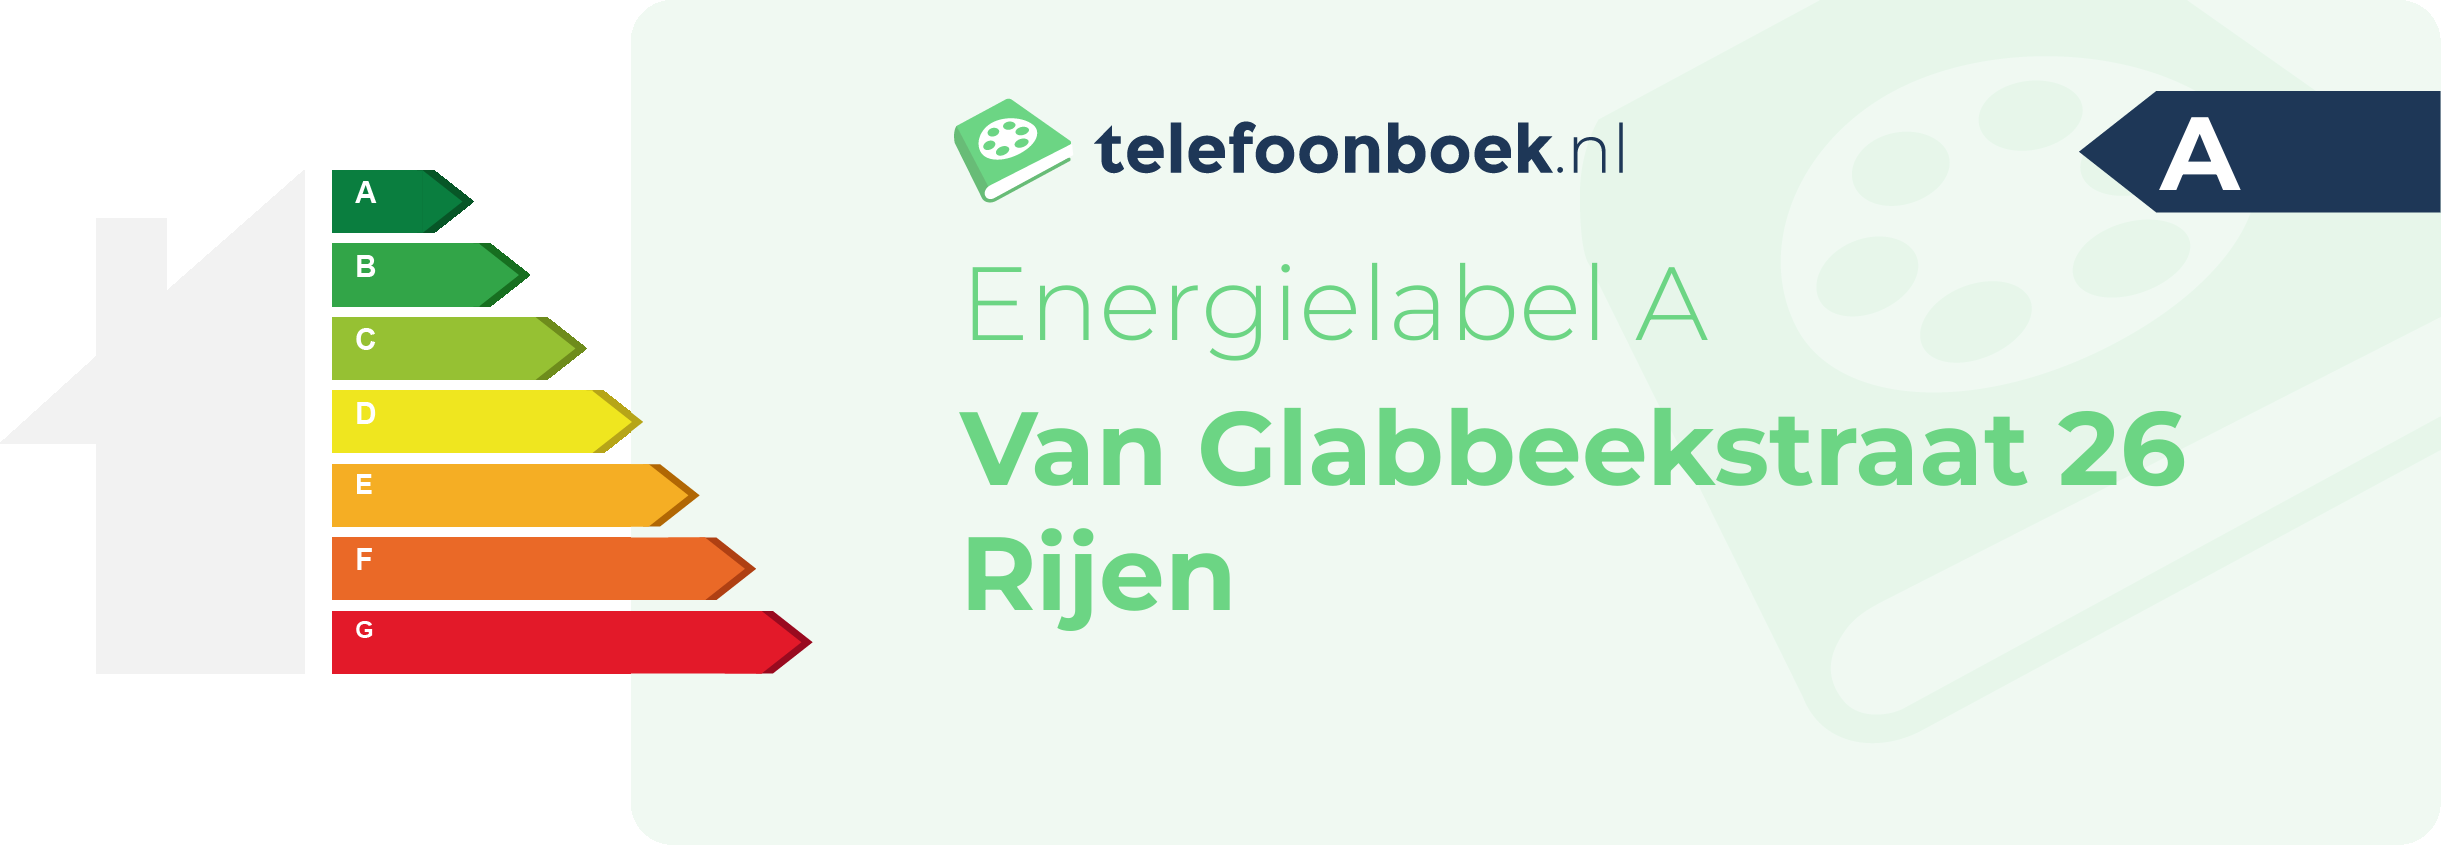 Energielabel Van Glabbeekstraat 26 Rijen